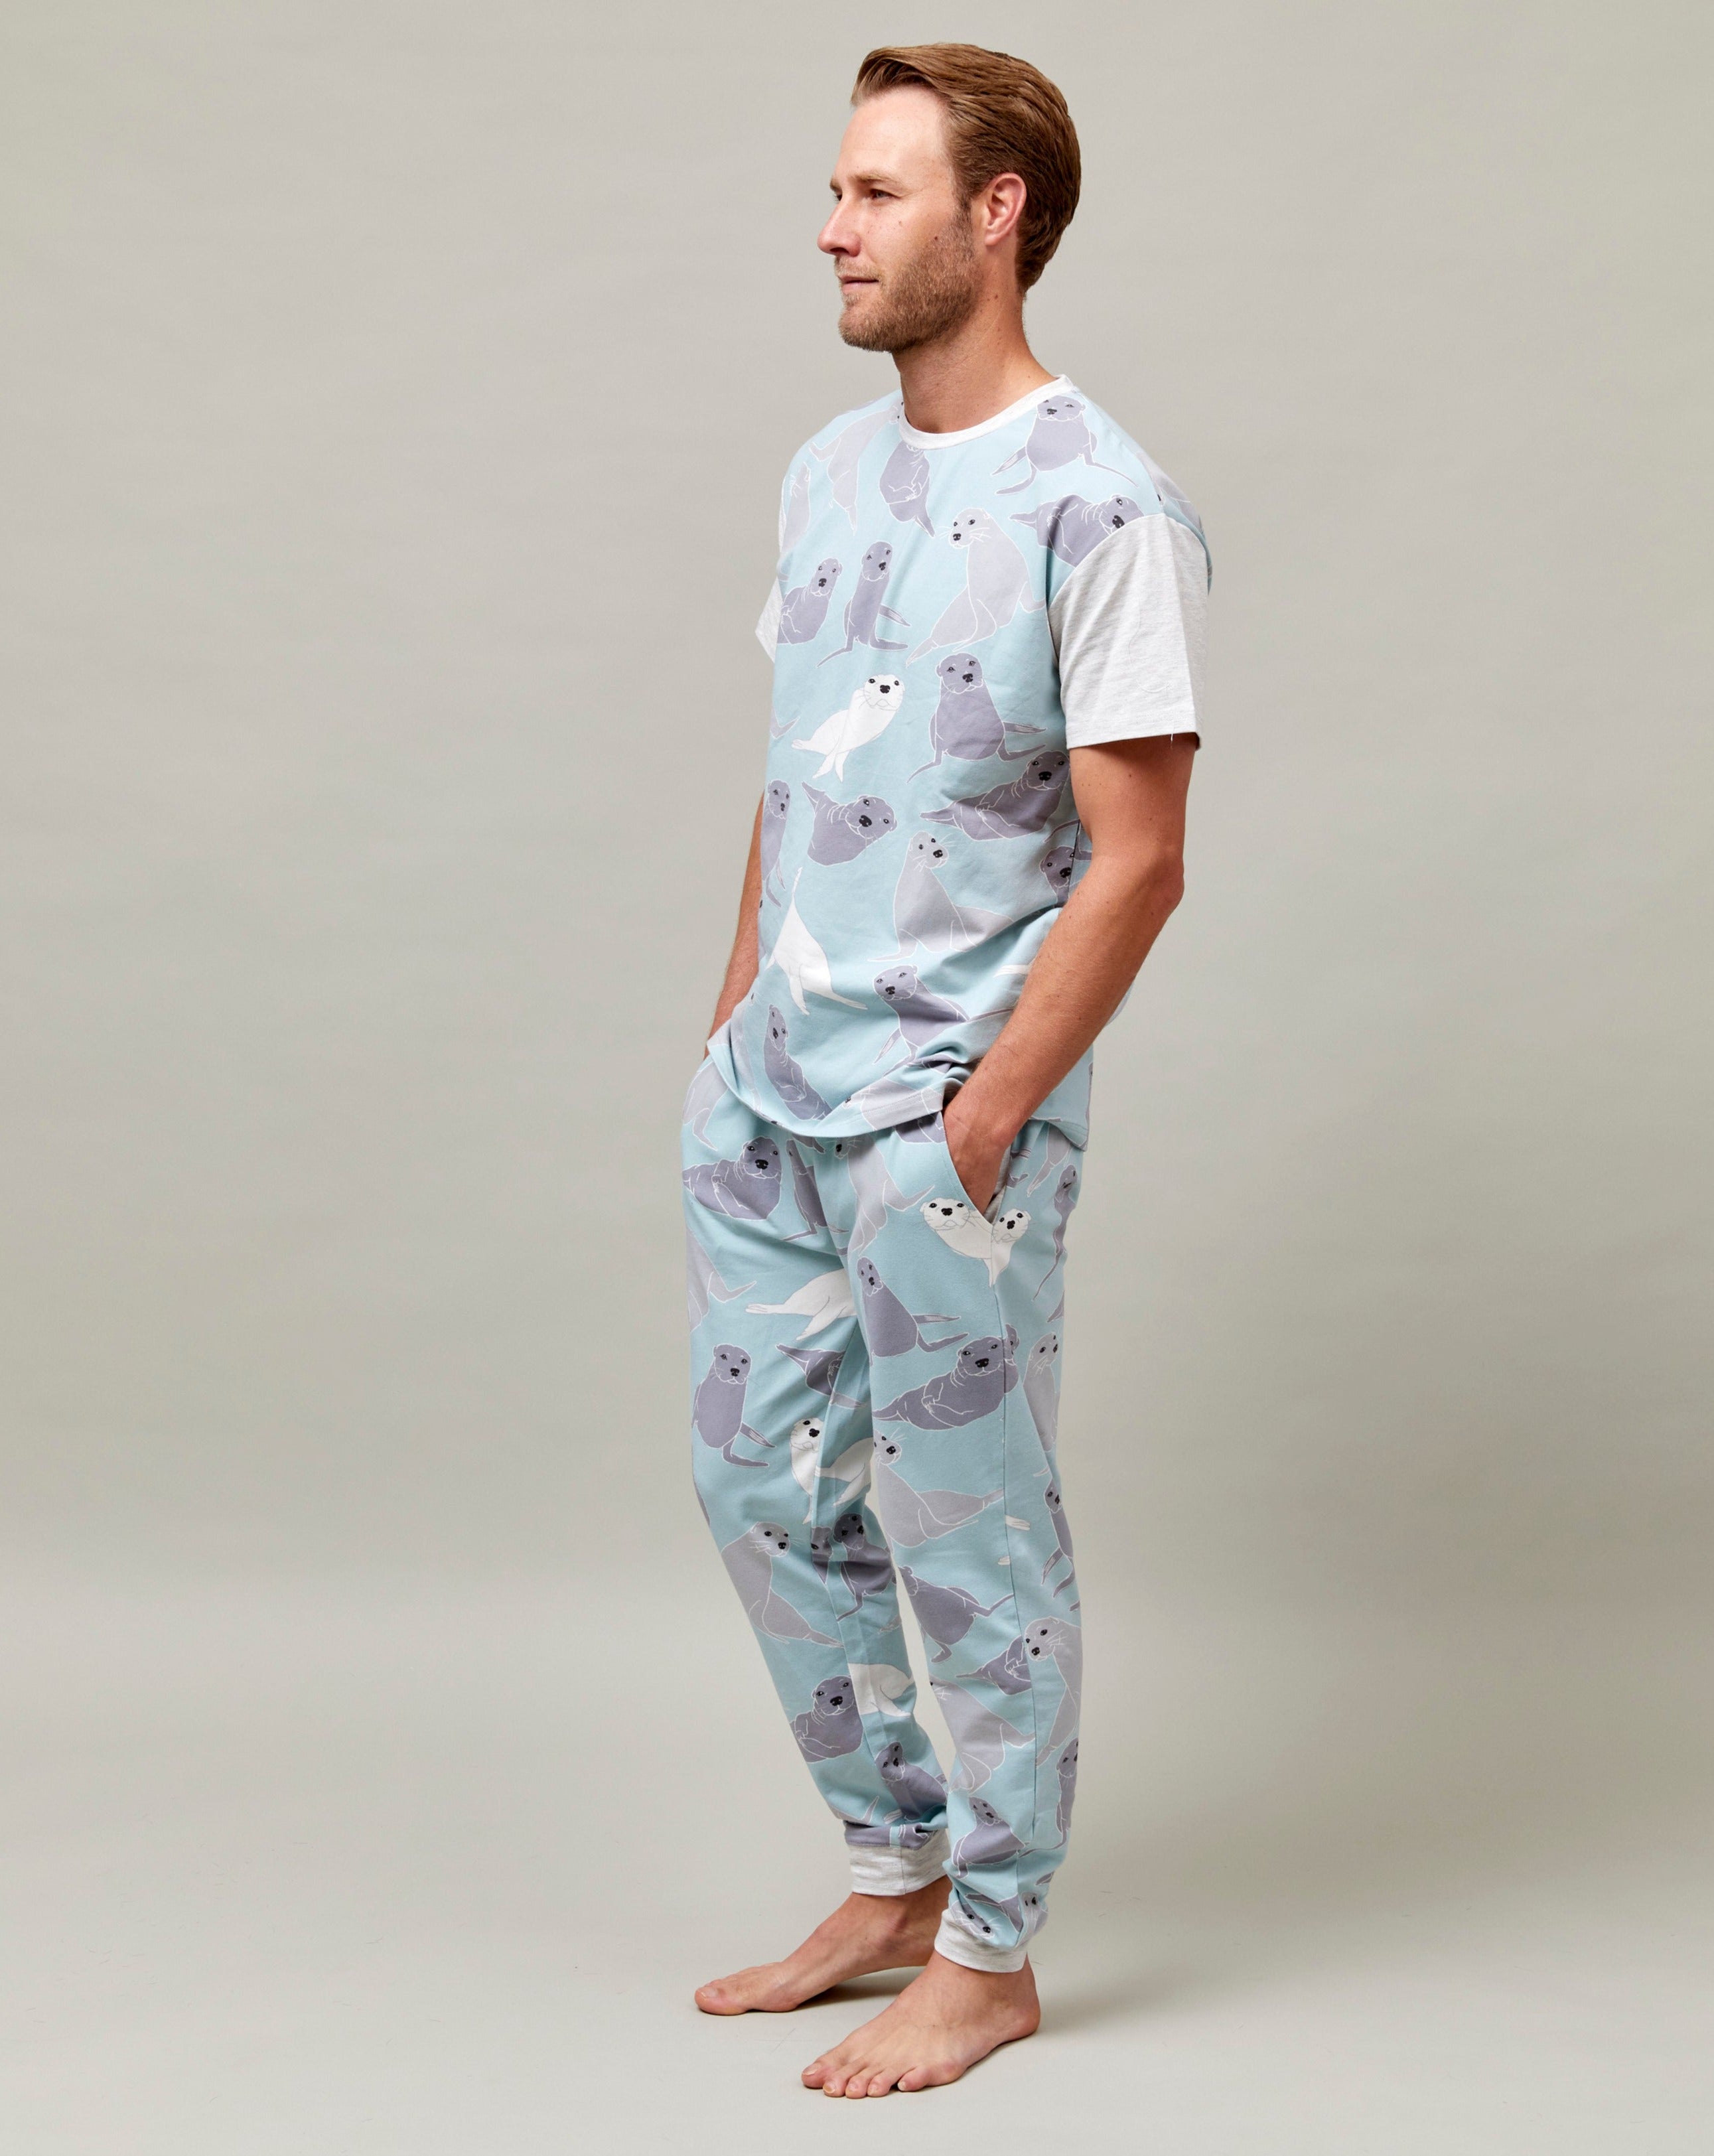 Sealy Staffies Men’s Long Pyjama Set.